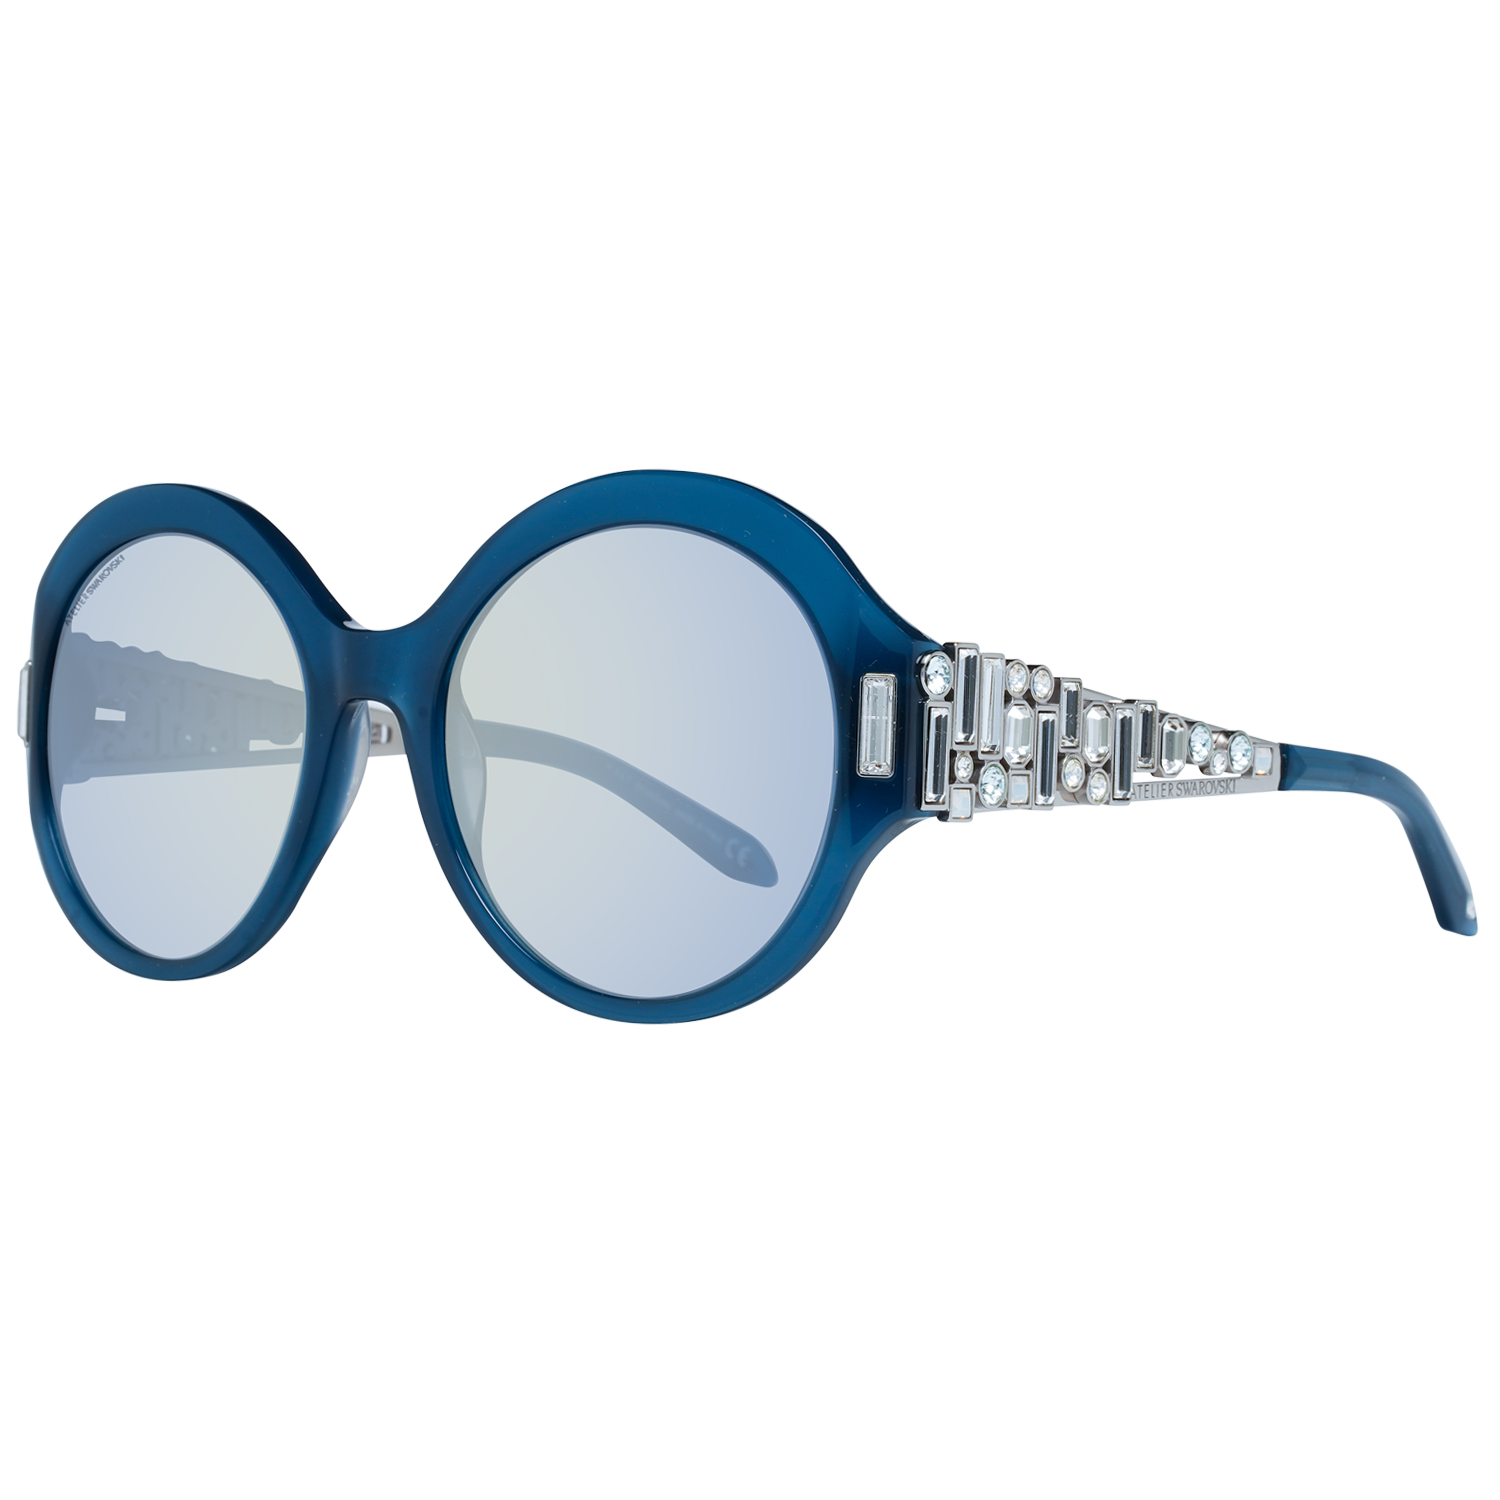 Atelier Swarovski Blue Women Sunglasses - DEA STILOSA MILANO